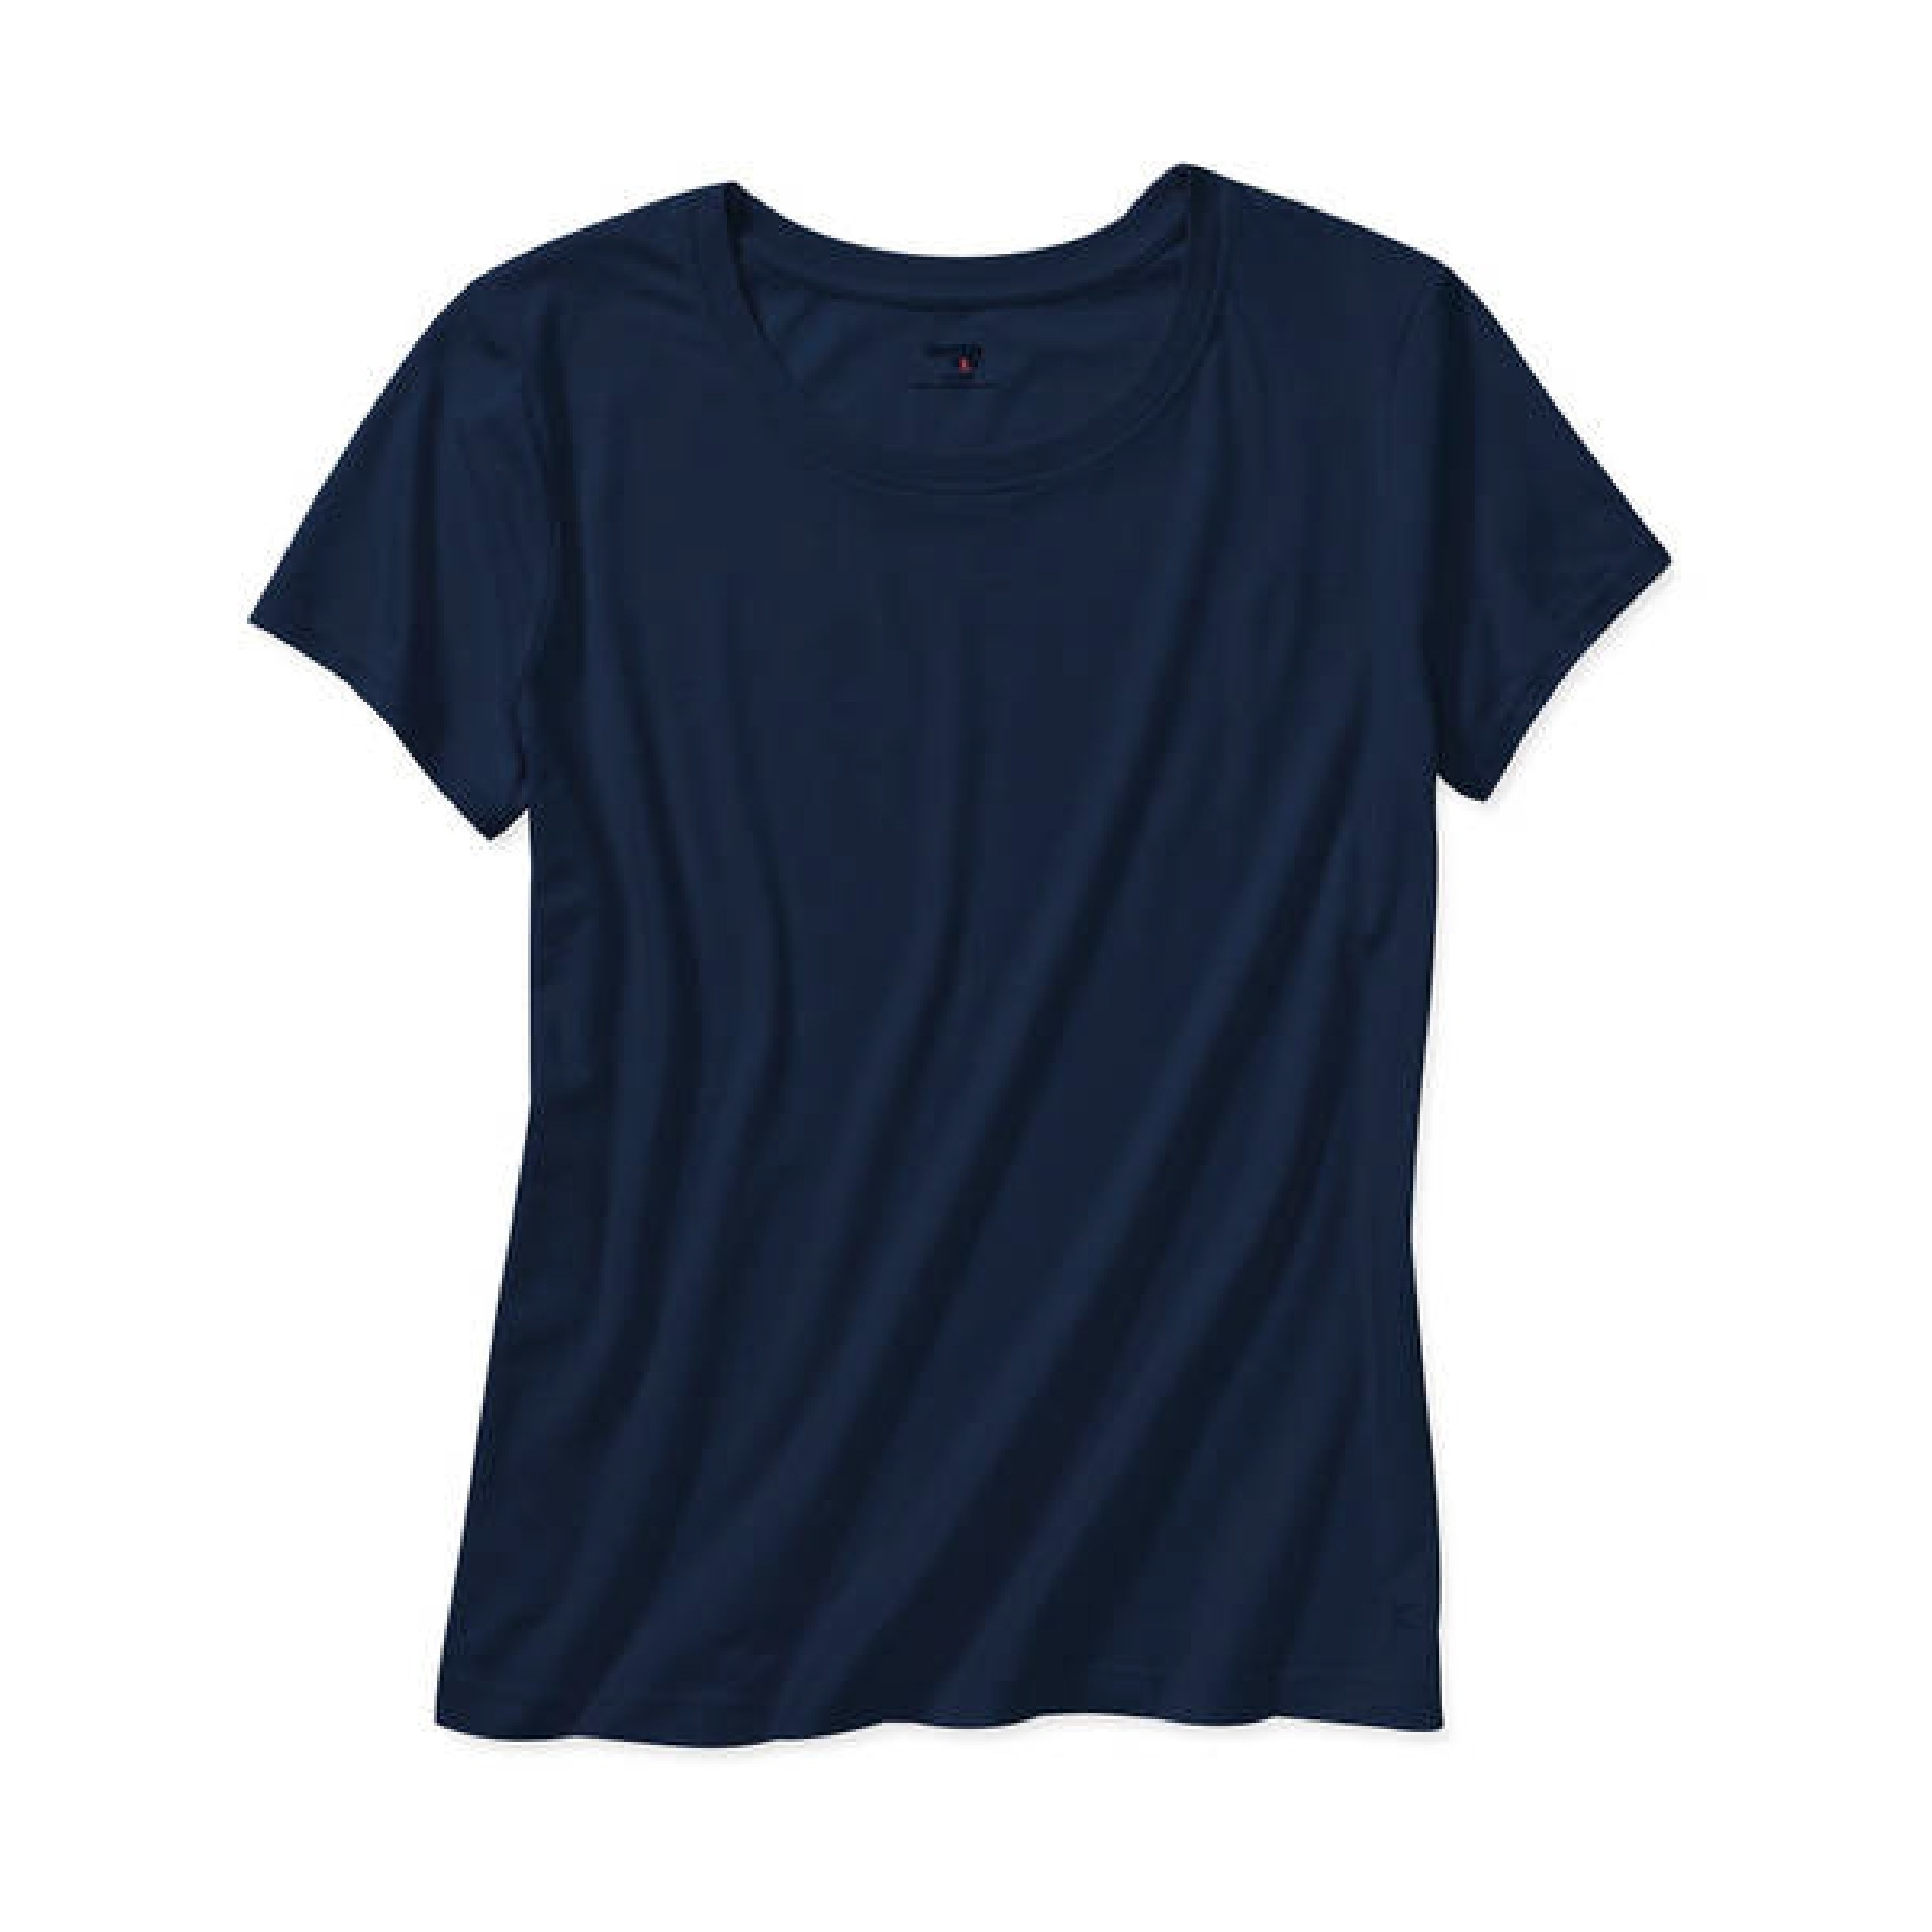 The navy T-shirt